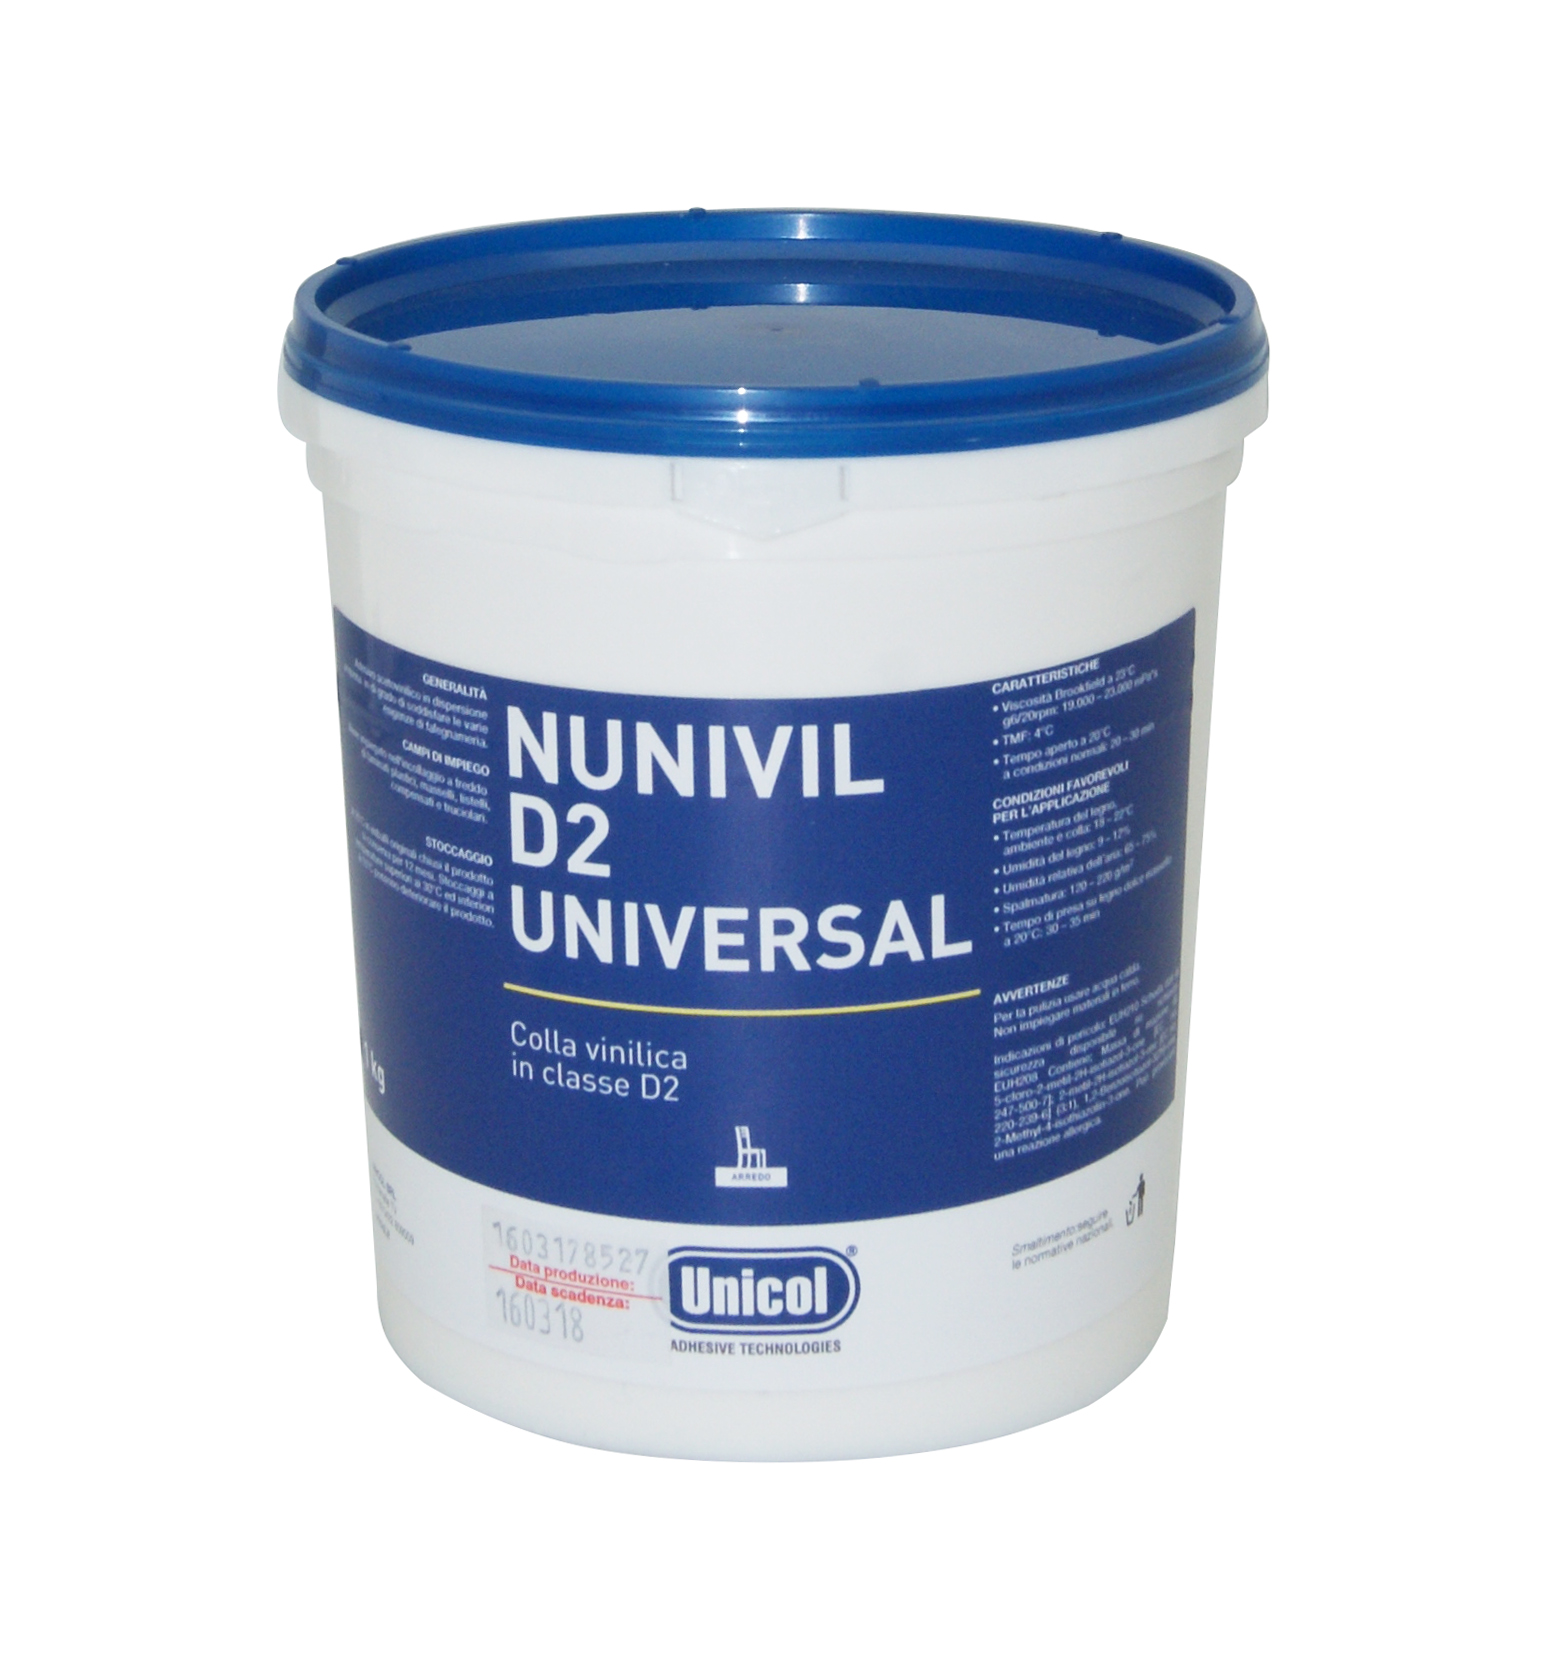 Nunivil adesivo vinilico univers. d2 bianco (1 kg)